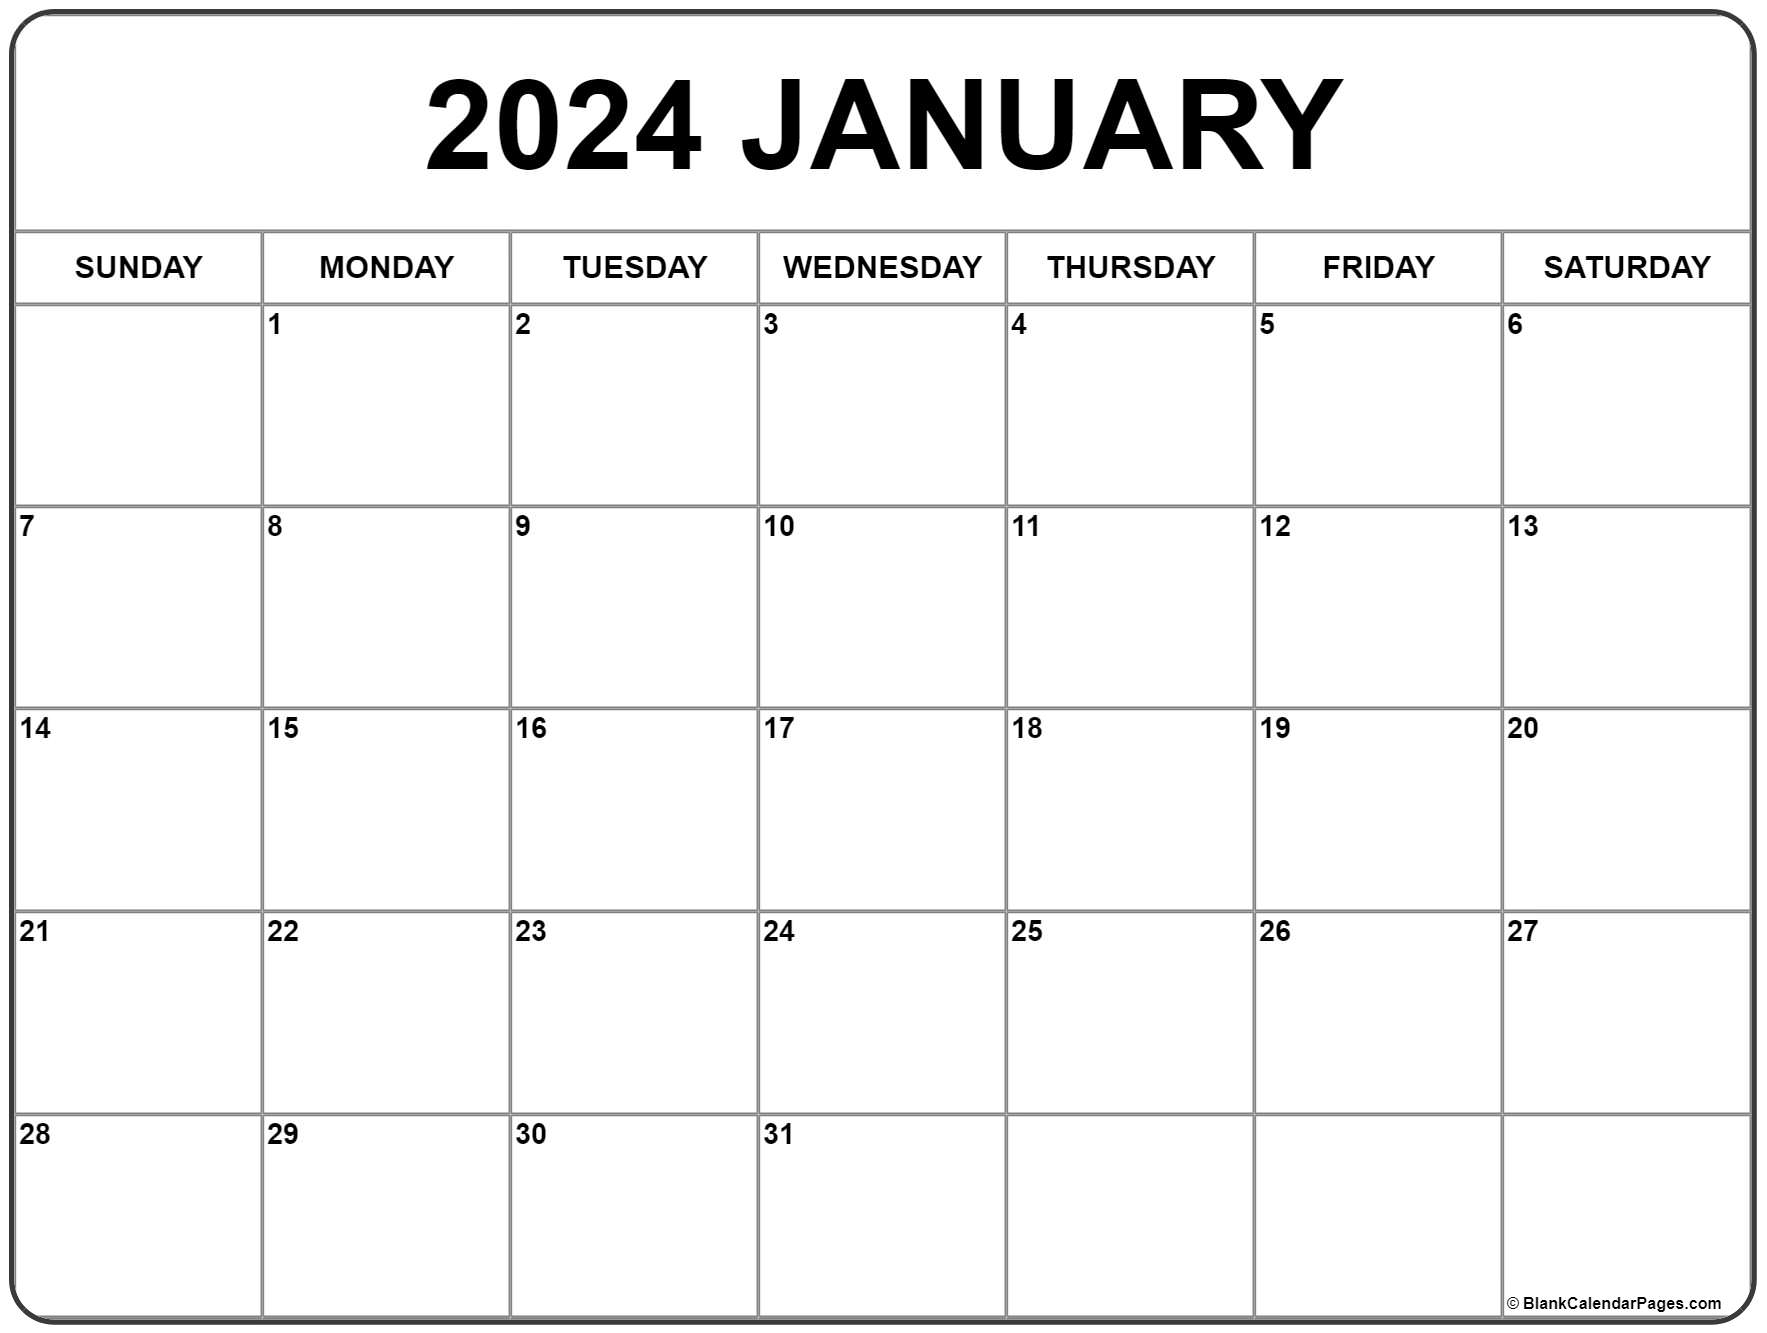 Jan Calendar 2021 January 2021 calendar | free printable monthly calendars